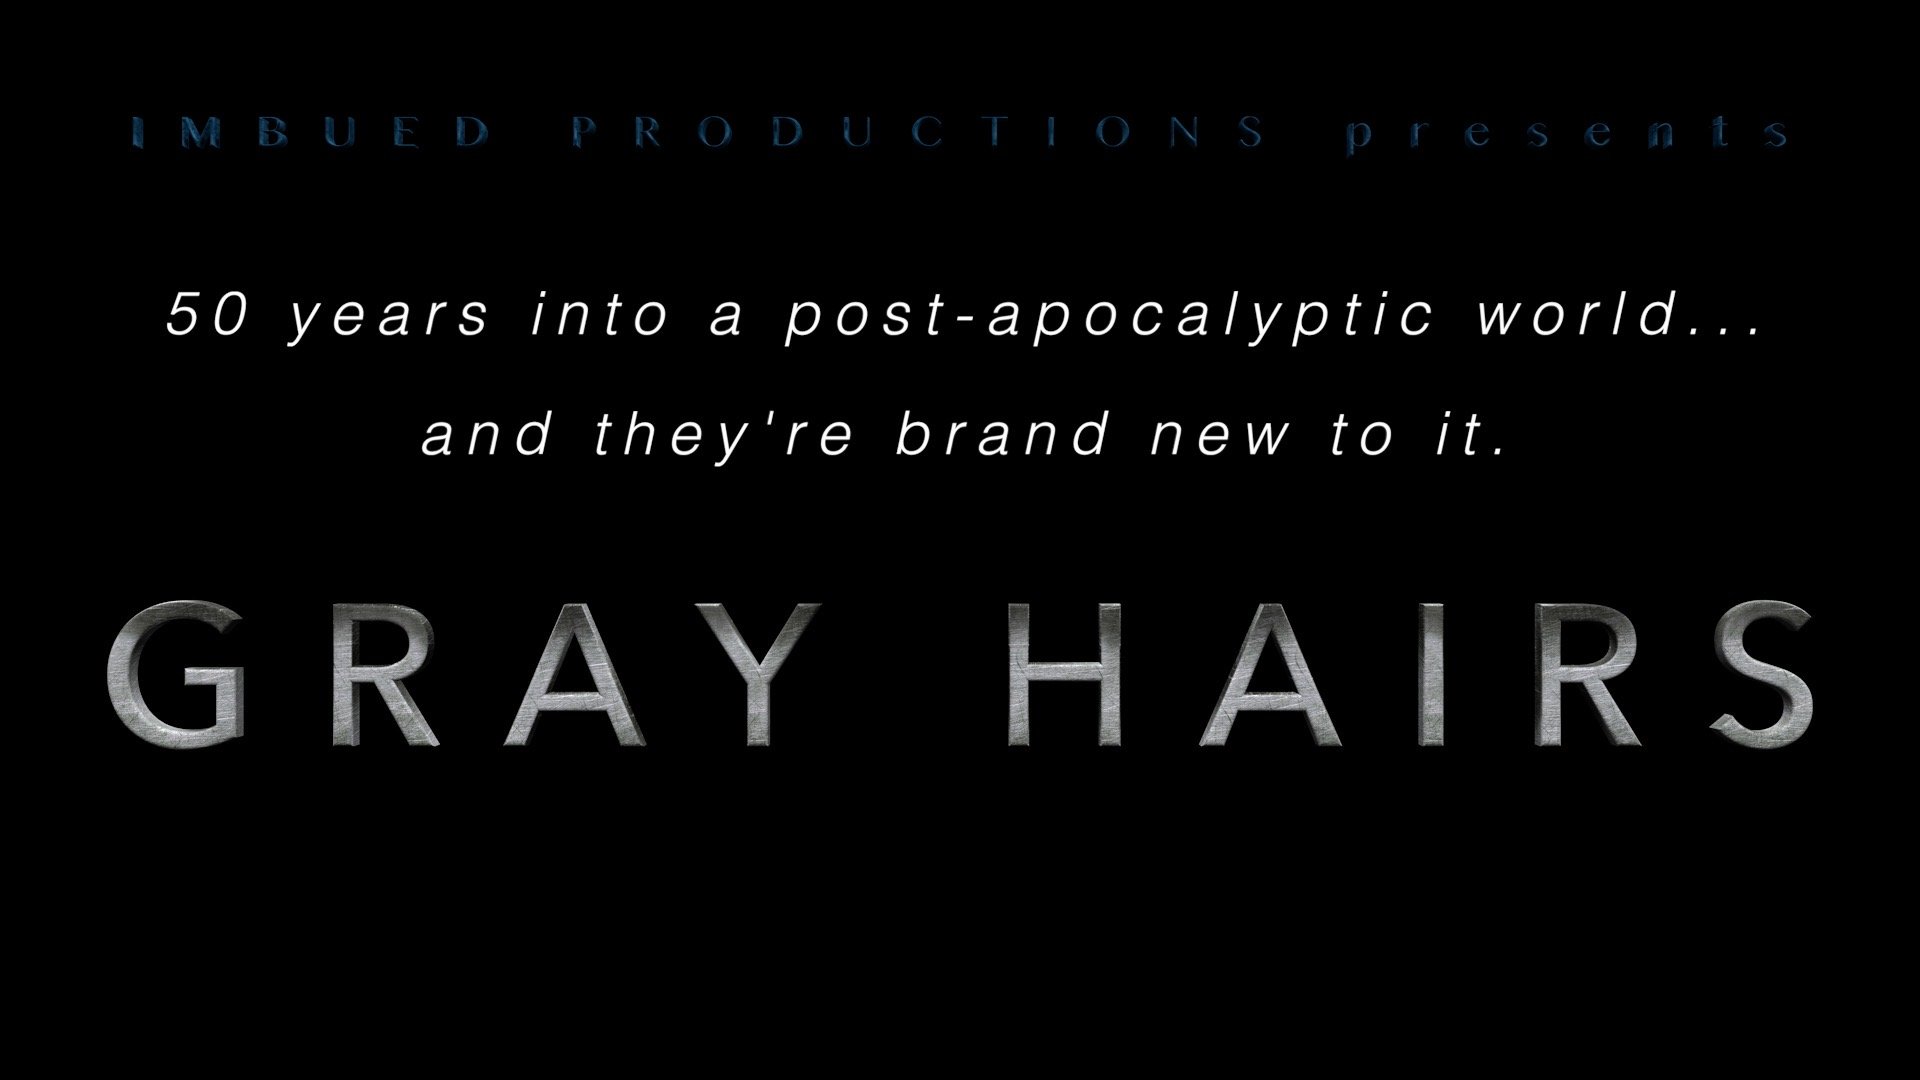 Gray Hairs banner 2.0.jpg